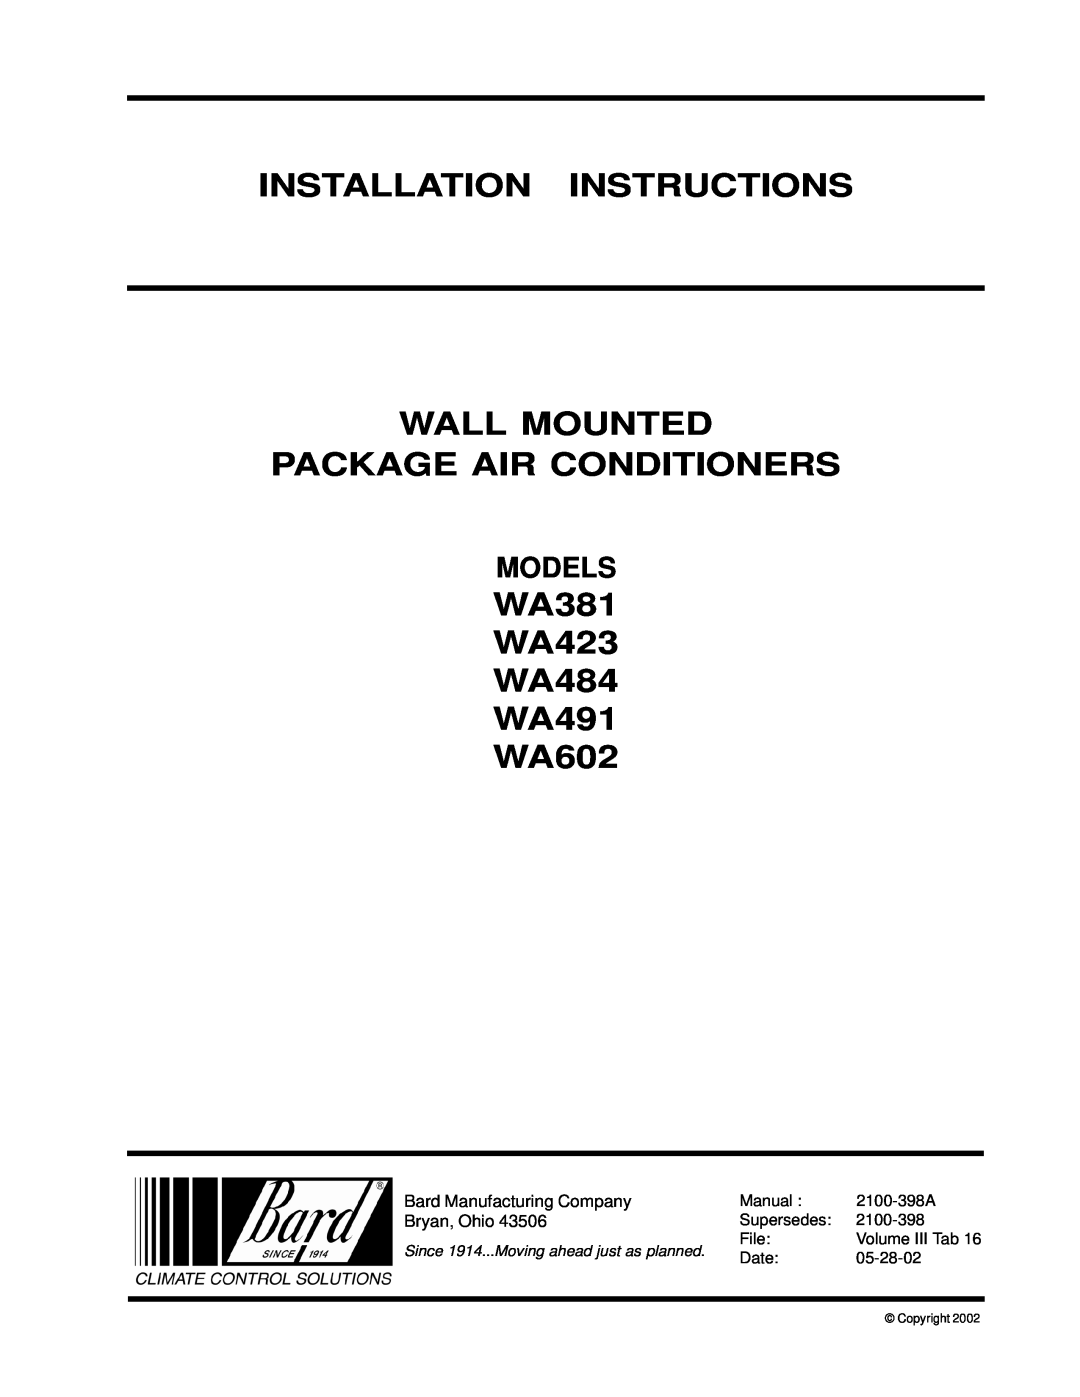 Bard WA491, WA602, WA484 installation instructions Installation Instructions Wall Mounted, Package Air Conditioners, Models 